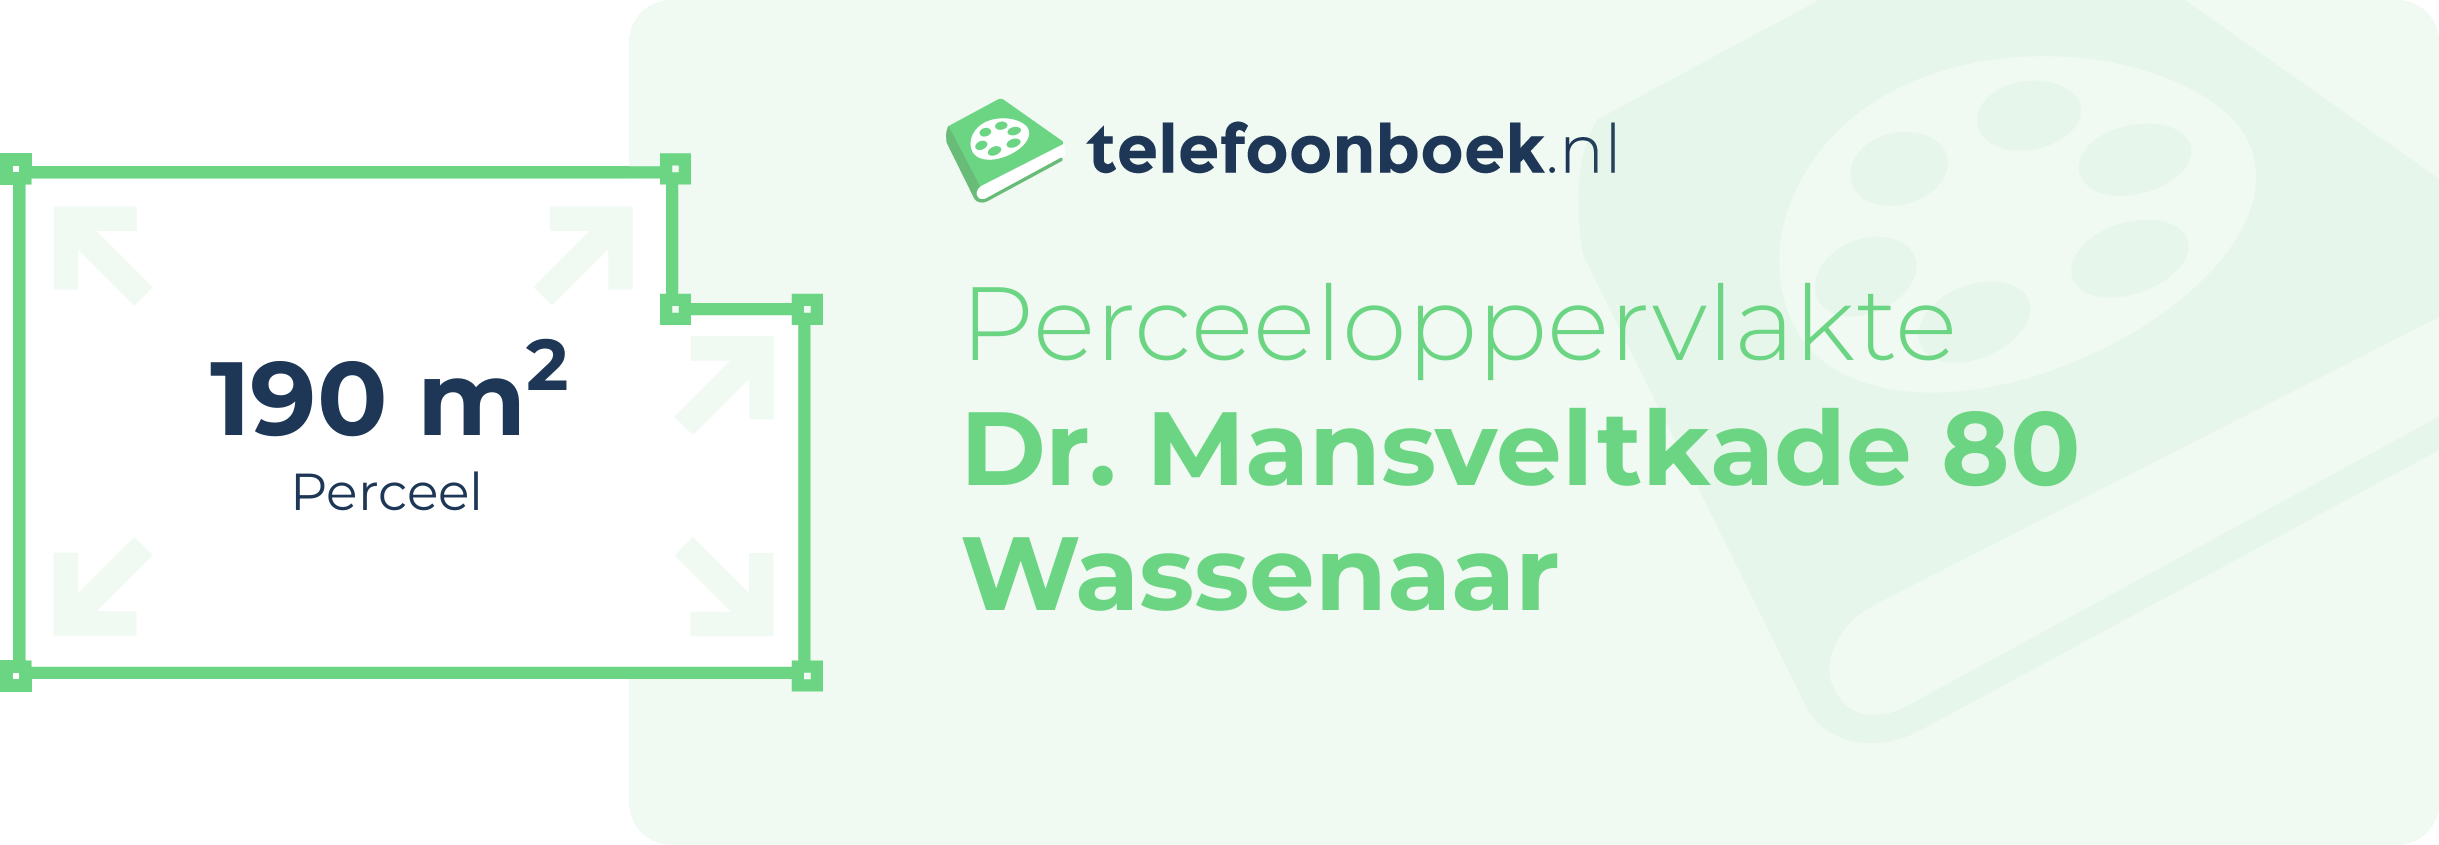 Perceeloppervlakte Dr. Mansveltkade 80 Wassenaar